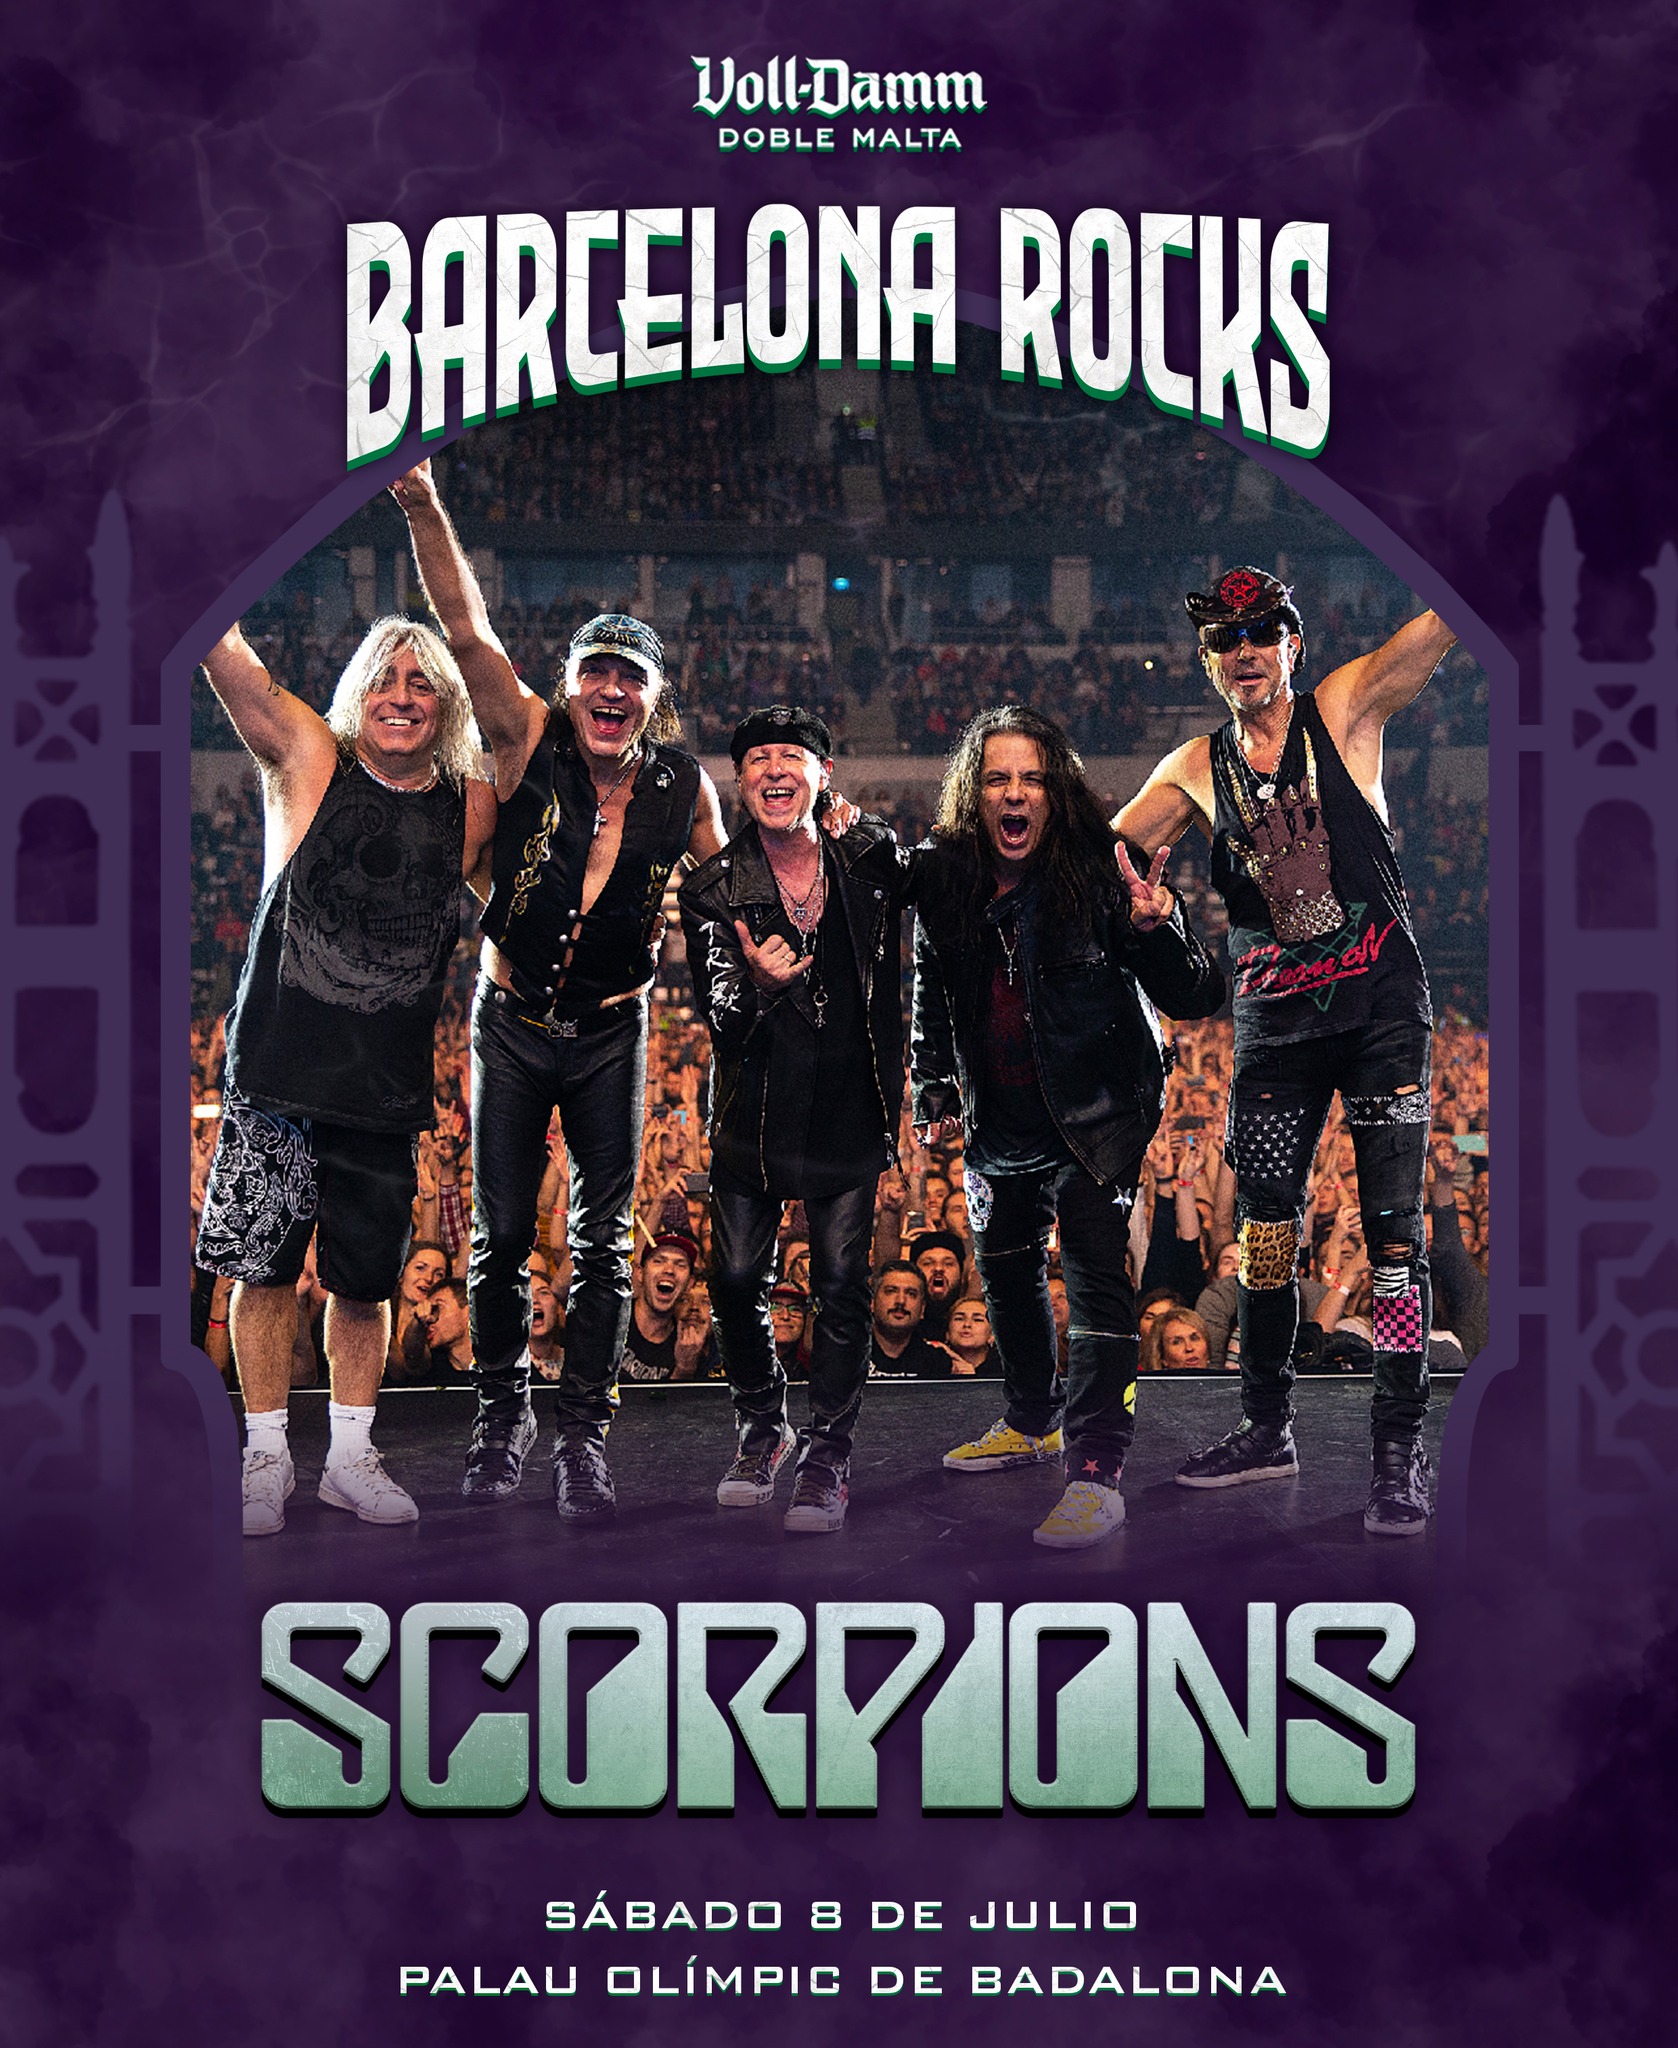 barcelona rocks scorpions pic 1